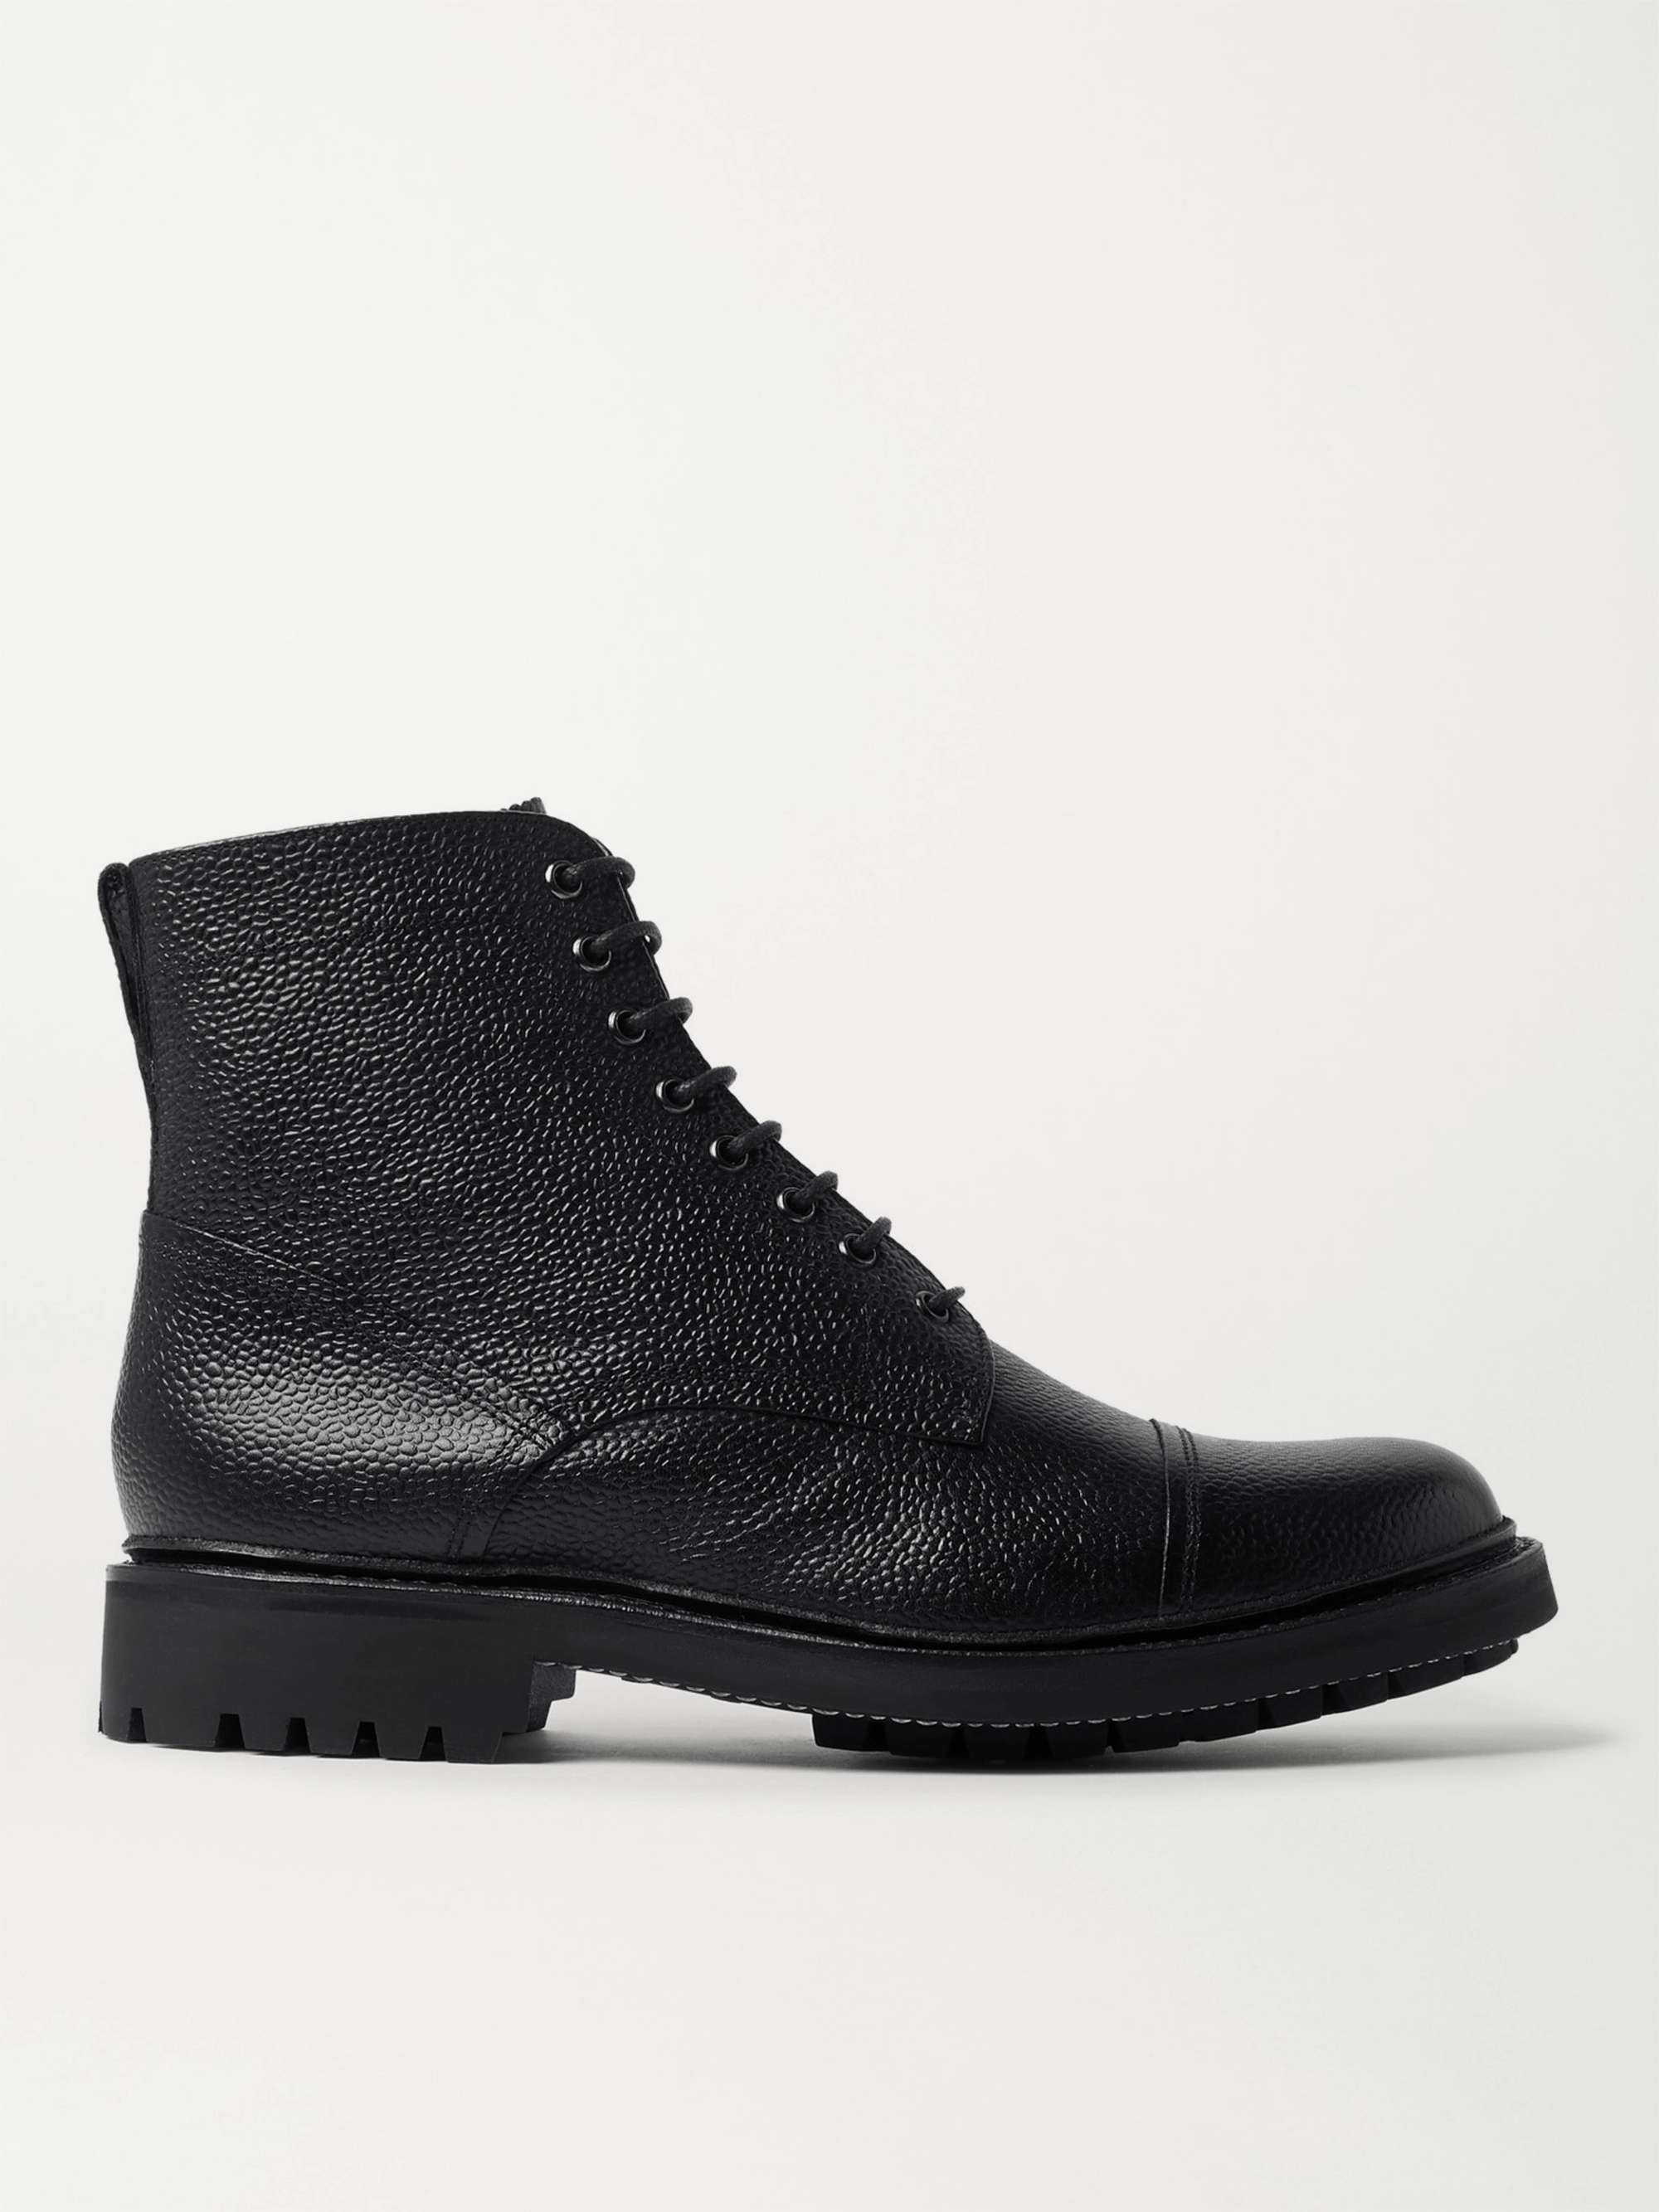 GRENSON Joseph Cap-Toe Pebble-Grain Leather Boots